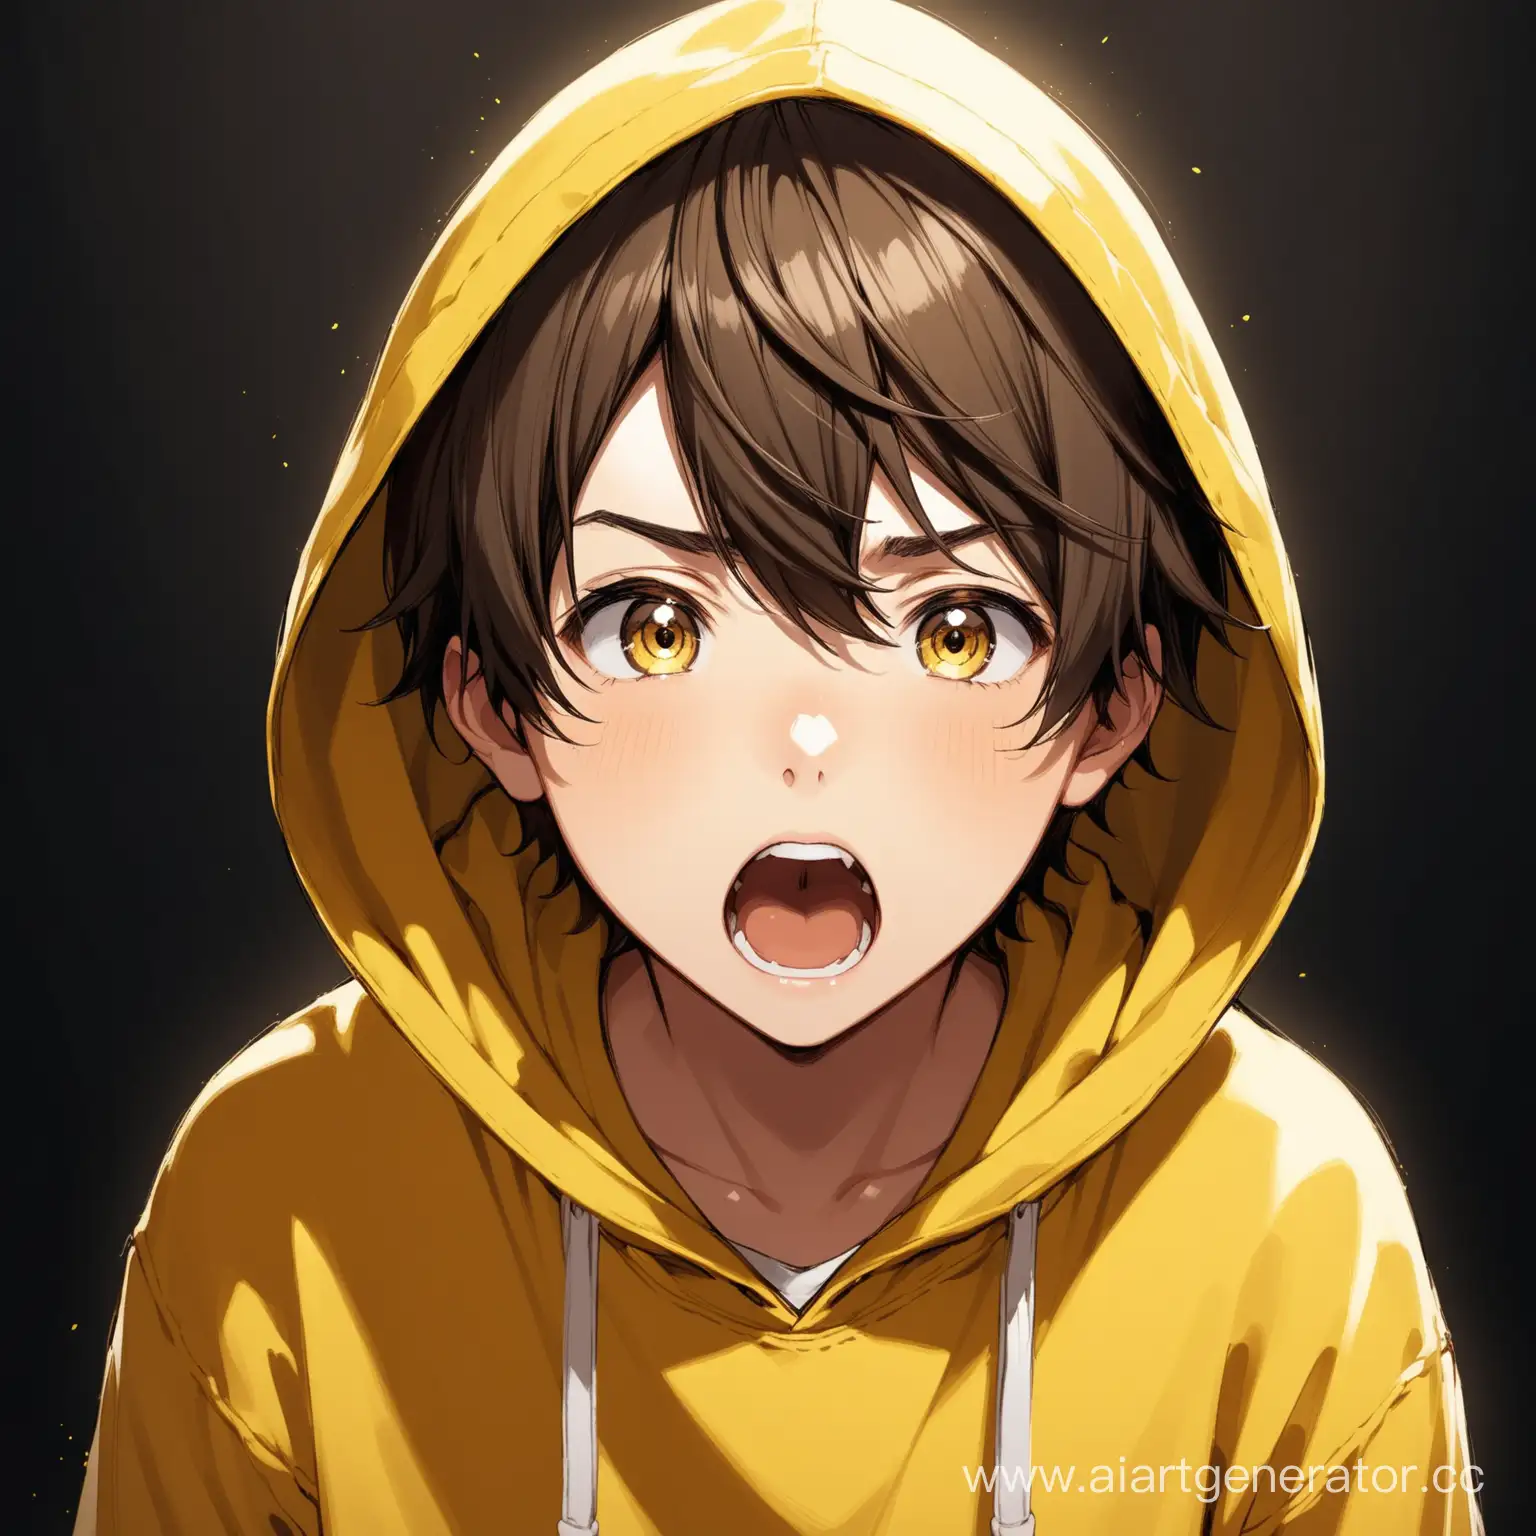 Expressive-Teenage-Boy-in-Yellow-Hoodie-Against-Black-Background